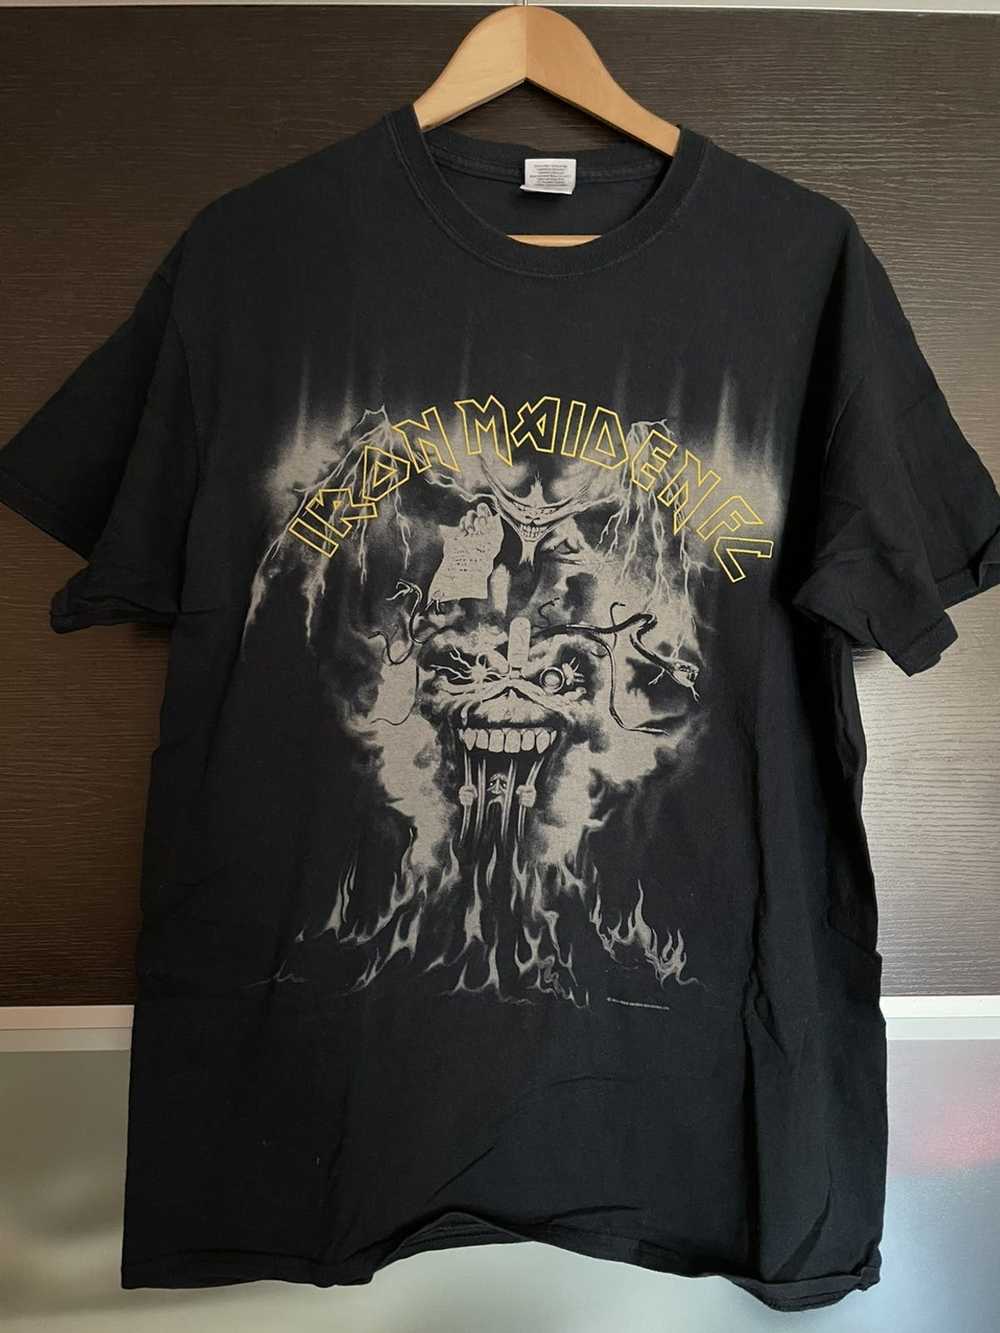 Band Tees Iron Maiden Fan Club T-Shirt 2012 - image 1